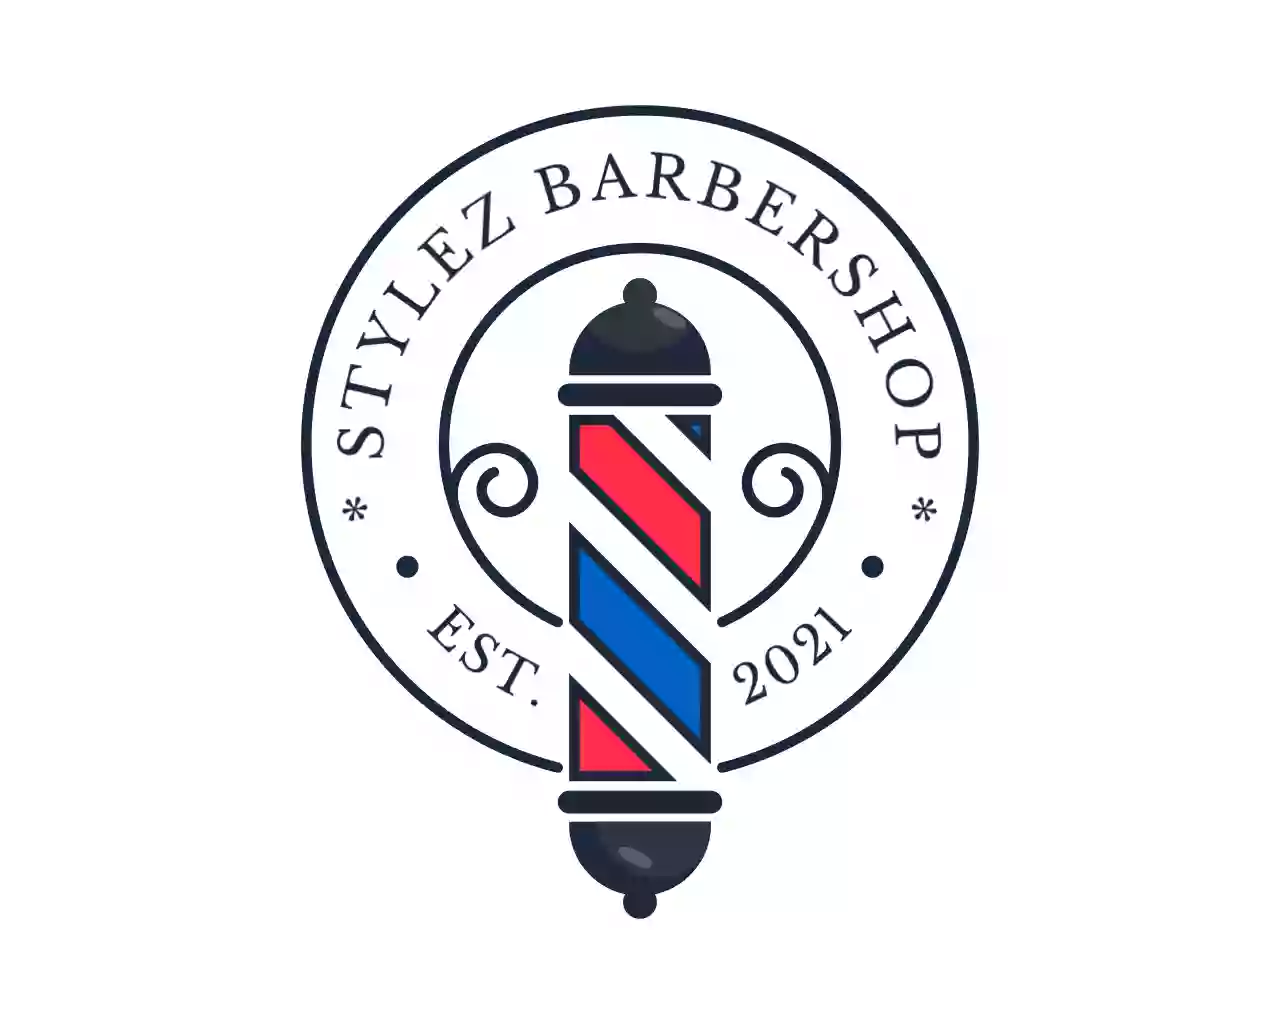 Stylez Barbershop (Open 7 days)